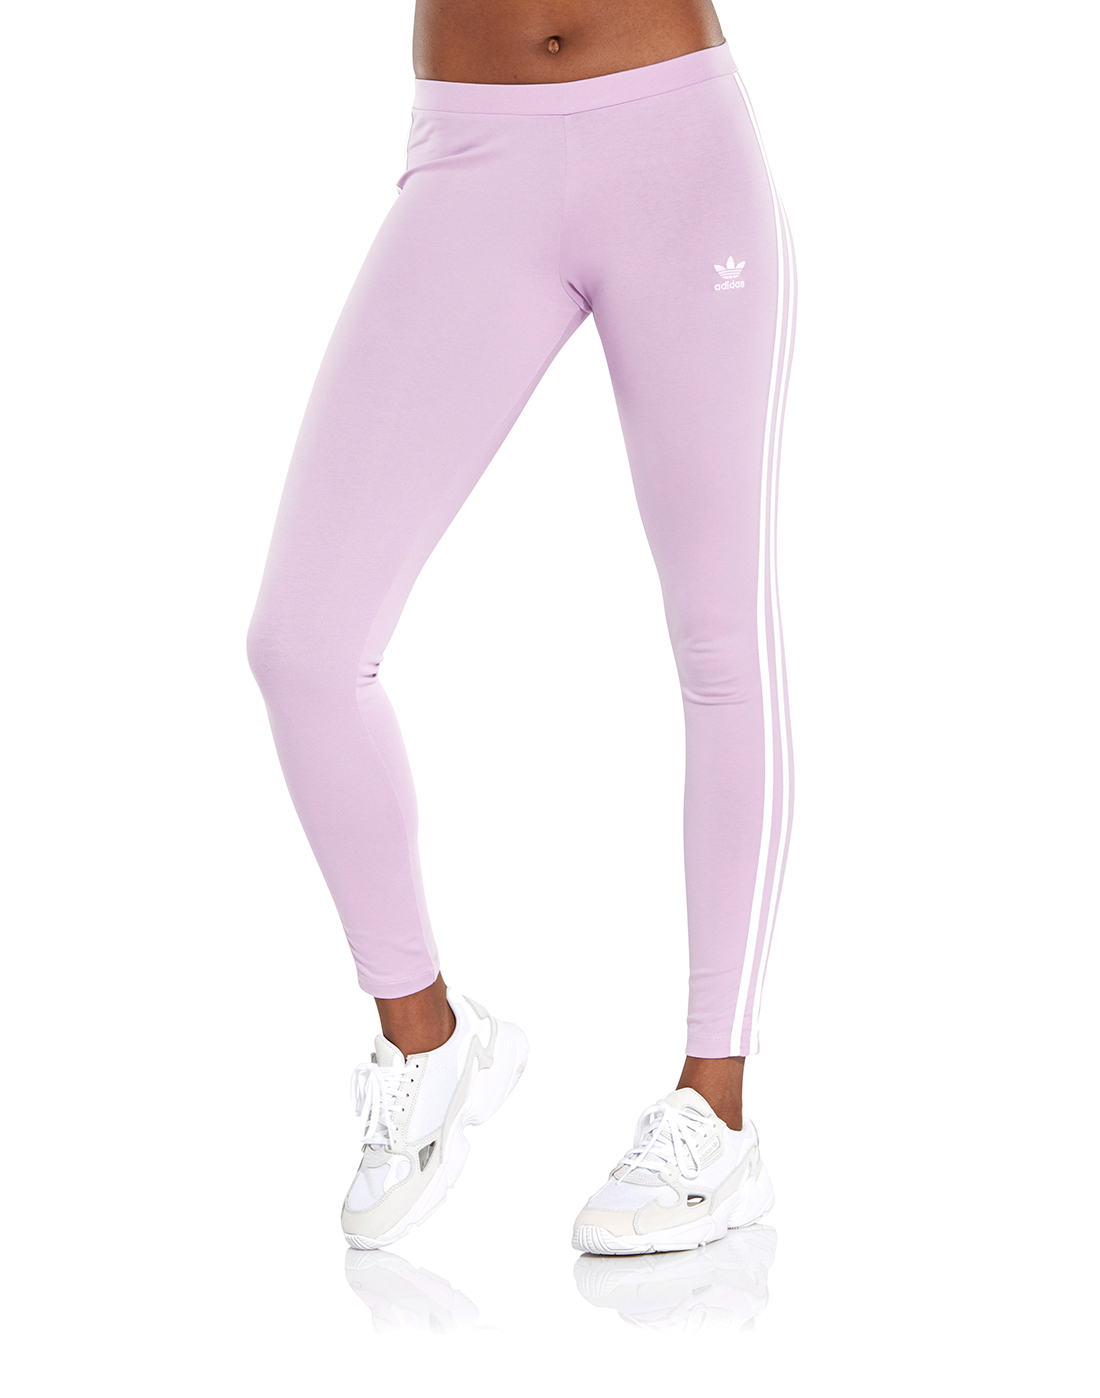 Buy Adidas women plus size pull on training leggings noble purple Online